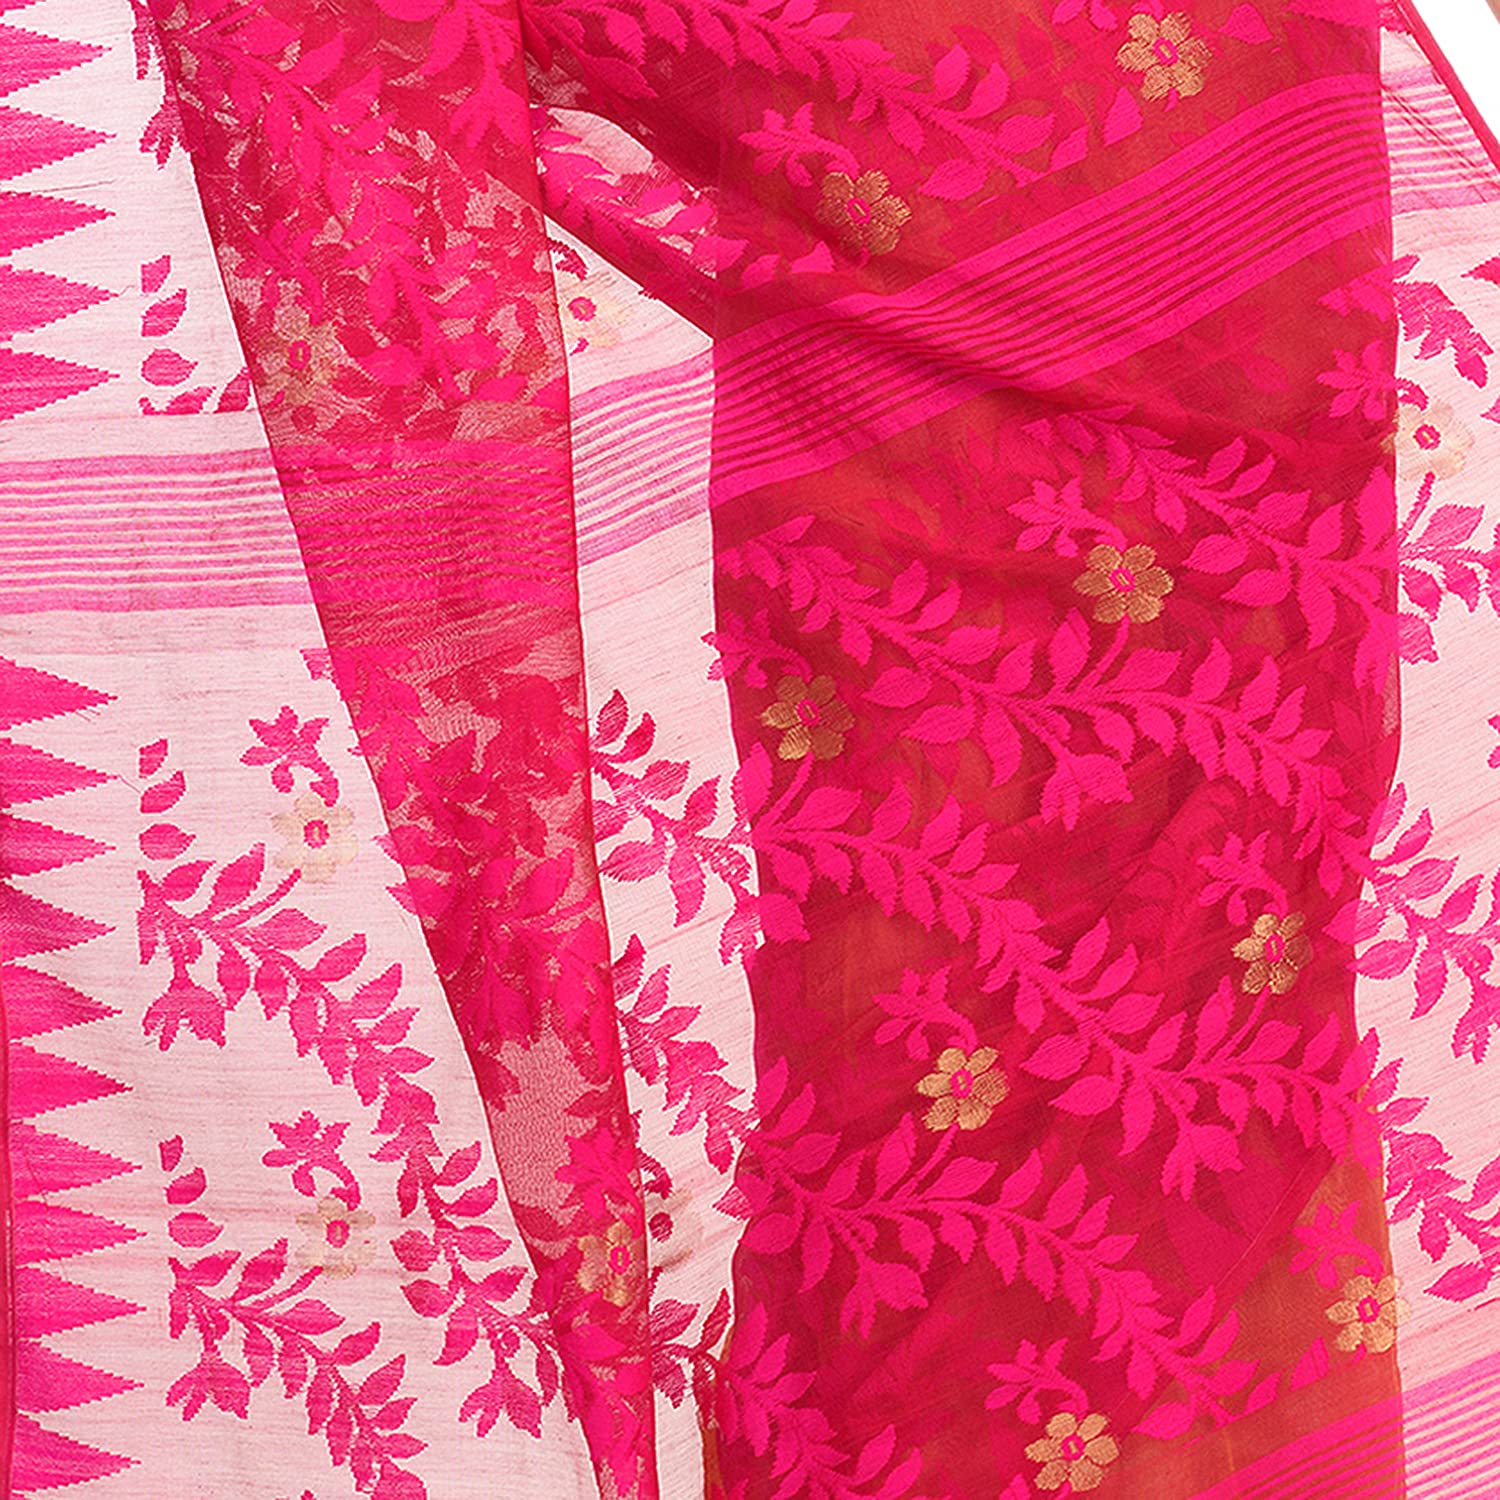 Women's Cotton Blend Handloom Yellow Pink Jamdani Saree - Piyari Fashion